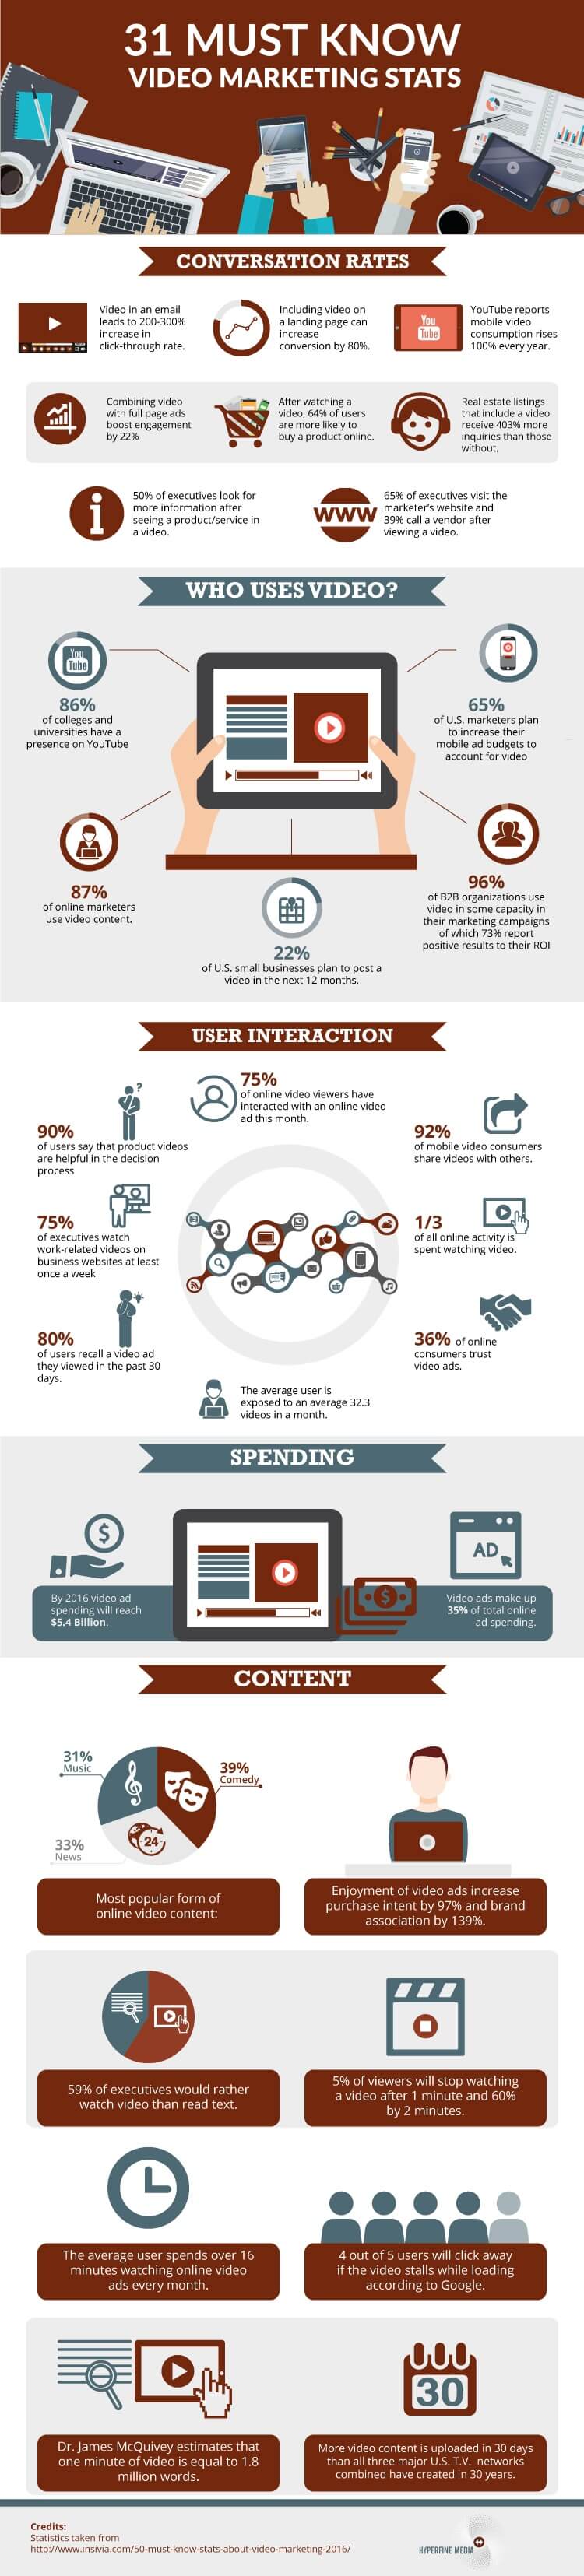 video-marketing-statistics-infographic